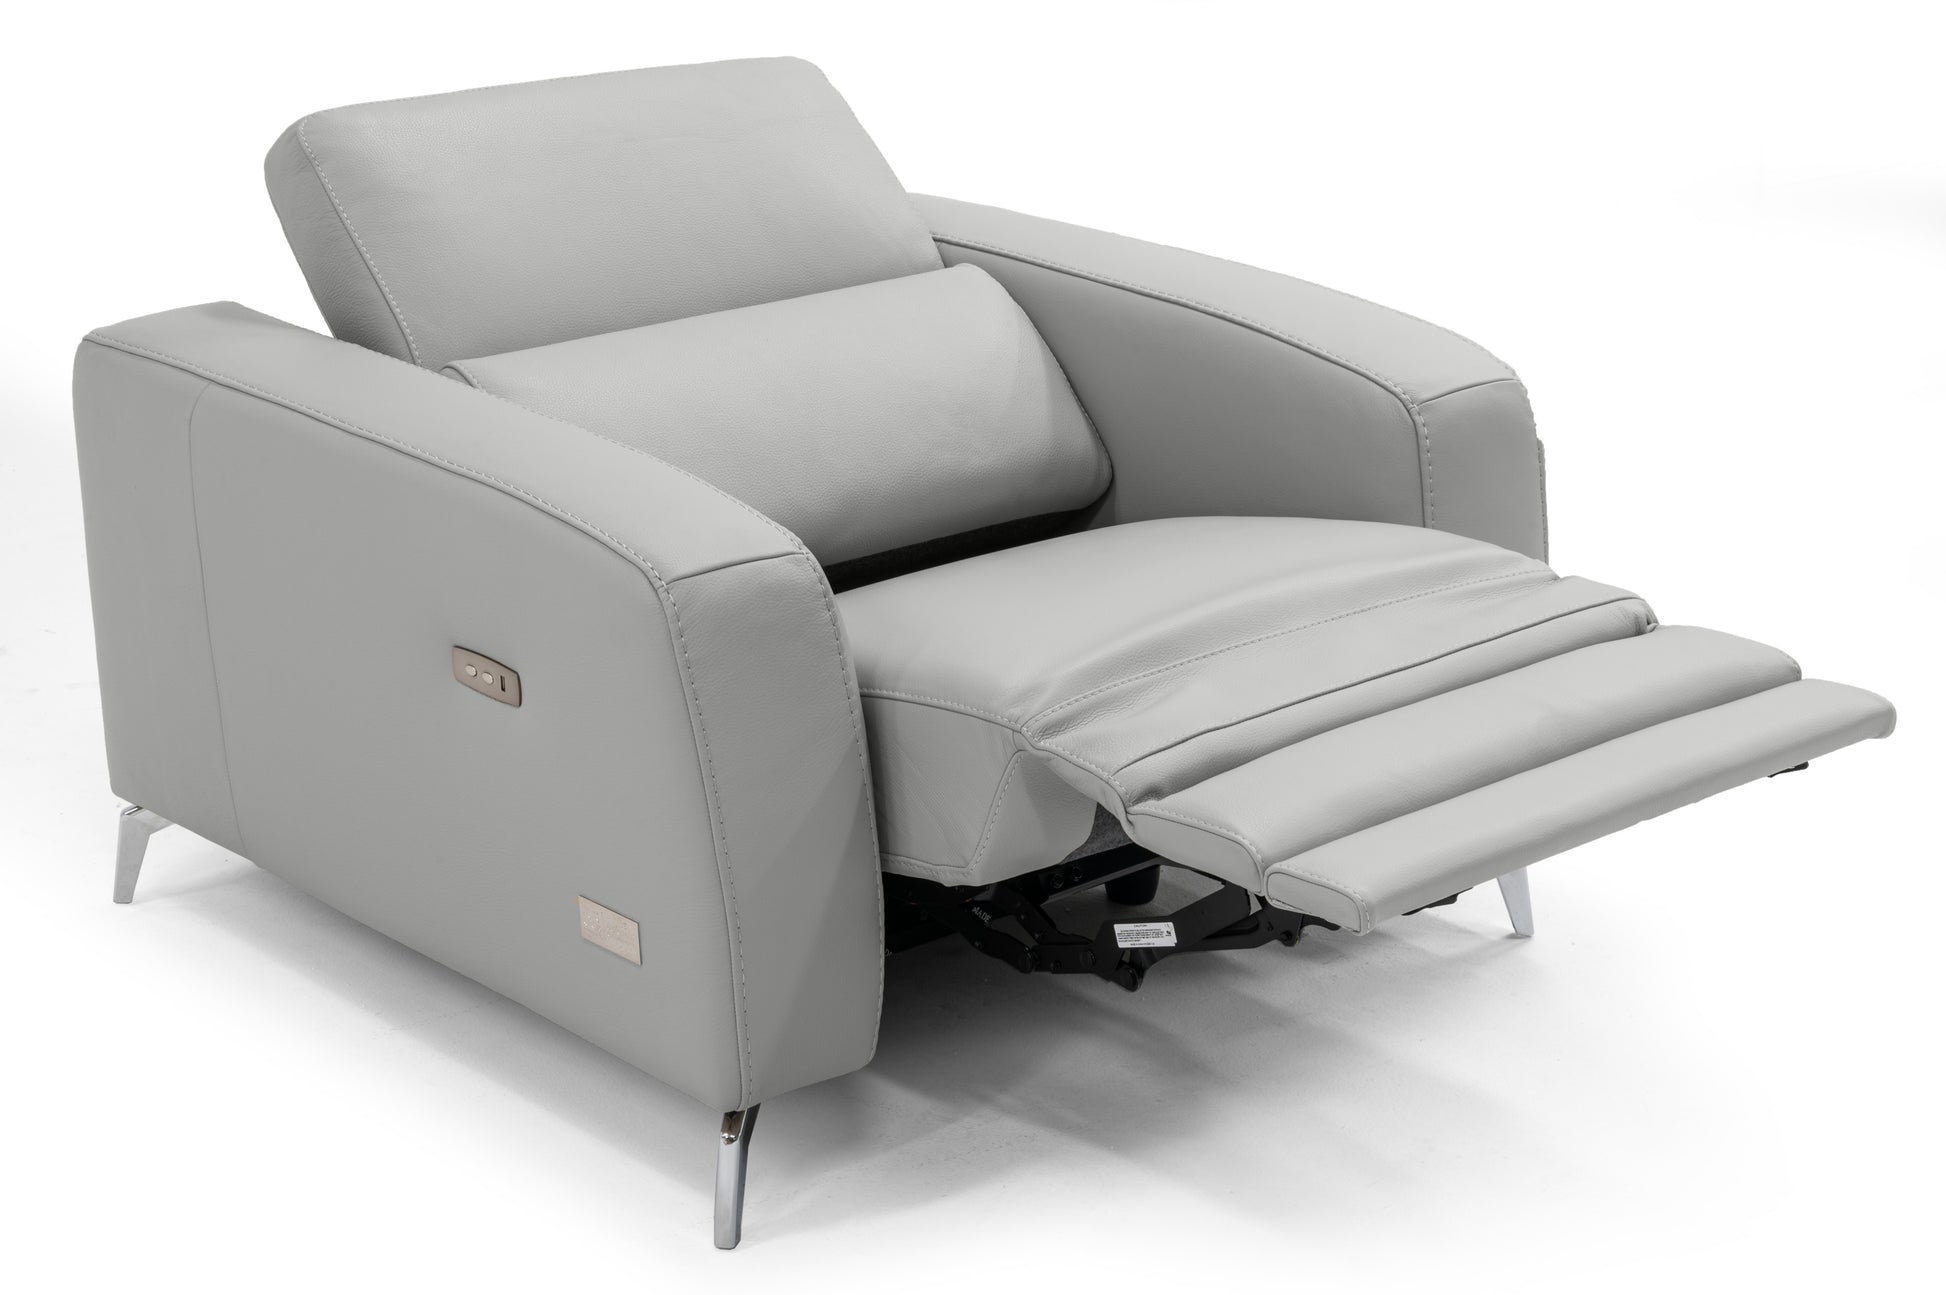 VIG Furniture Coronelli Turin Italian Grey Leather Recliner Chair